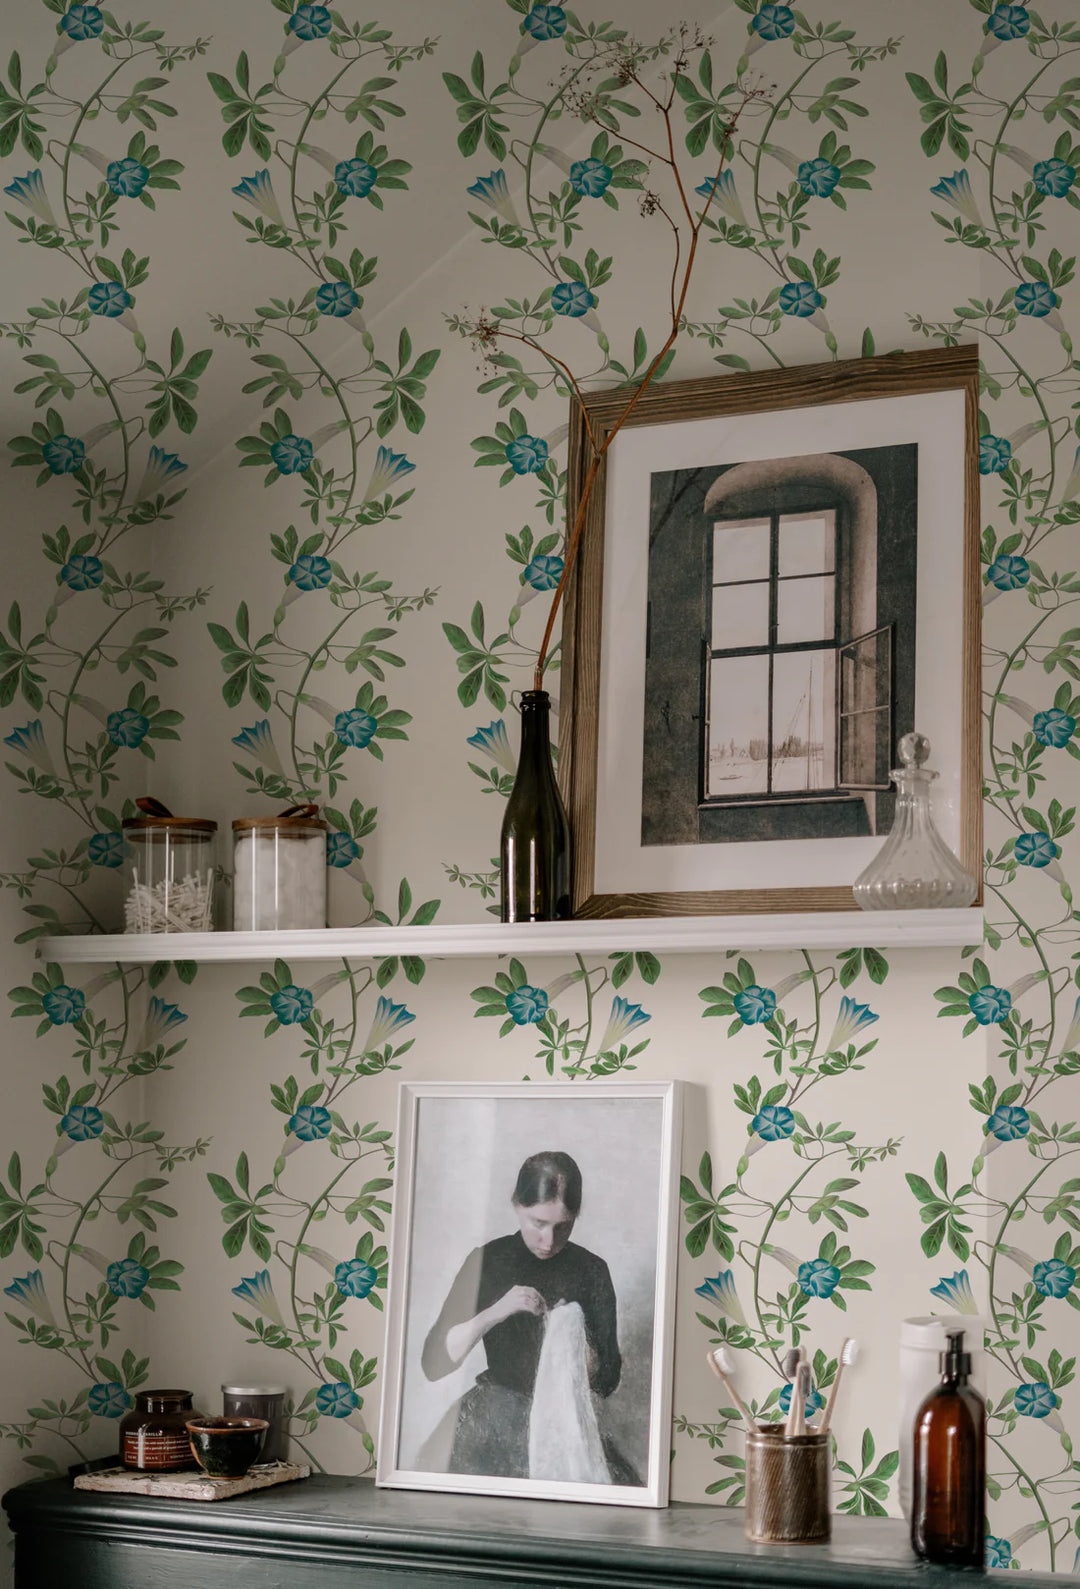 Deus-ex-gardenia-wallpaper-Midsummer-wallpaper-trialing-vines-and-flowers-french-toile-british-garden-leafy-trellis-hand-illustrated-pattern-linen-blue-green-print-on-white-background